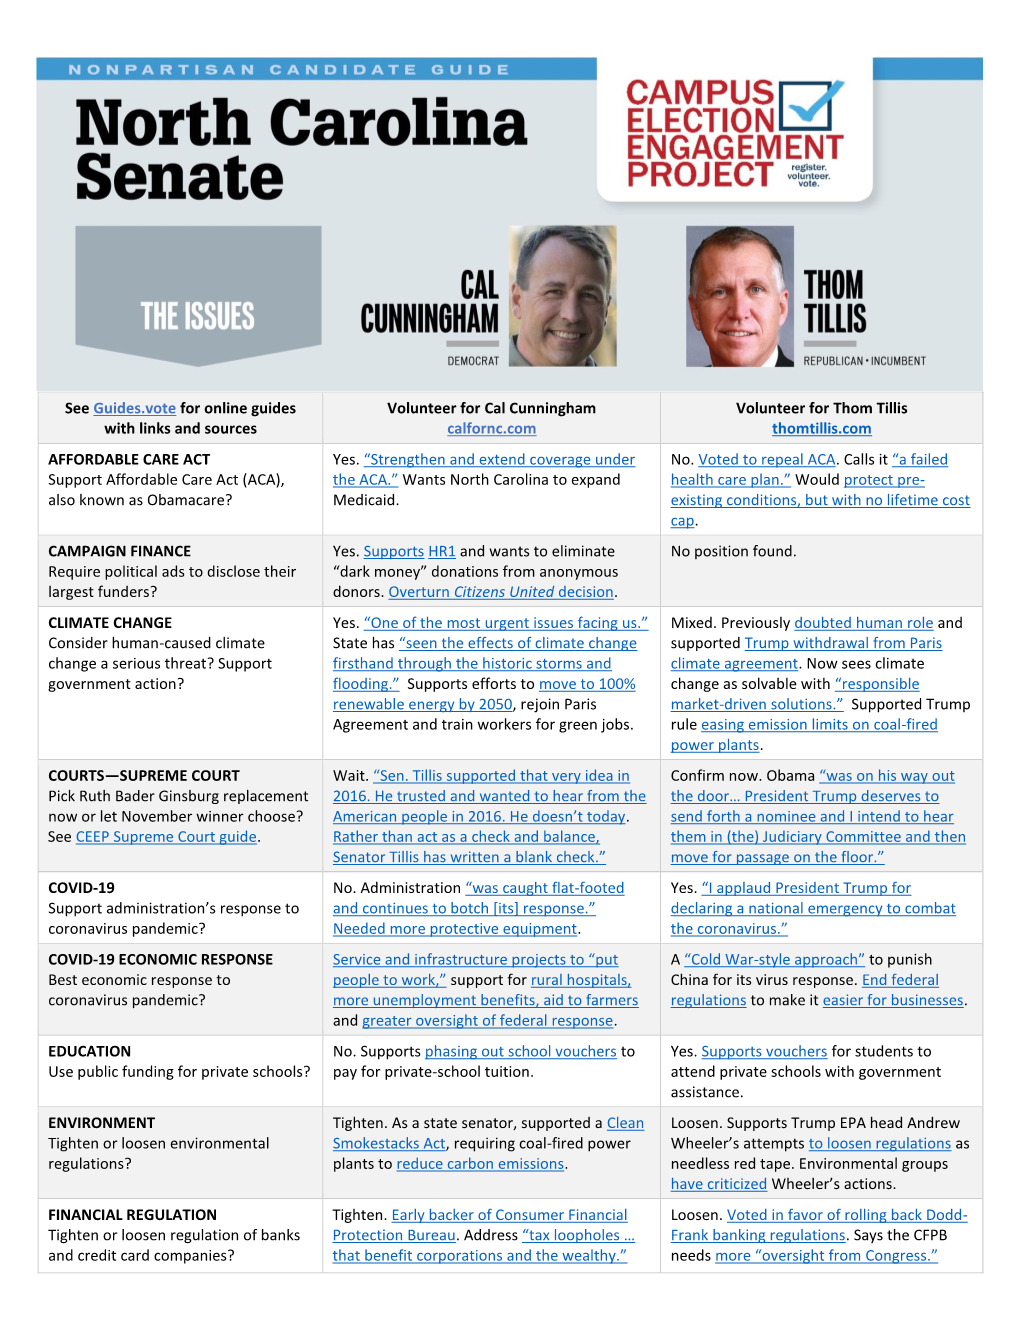 North Carolina Senate Guide